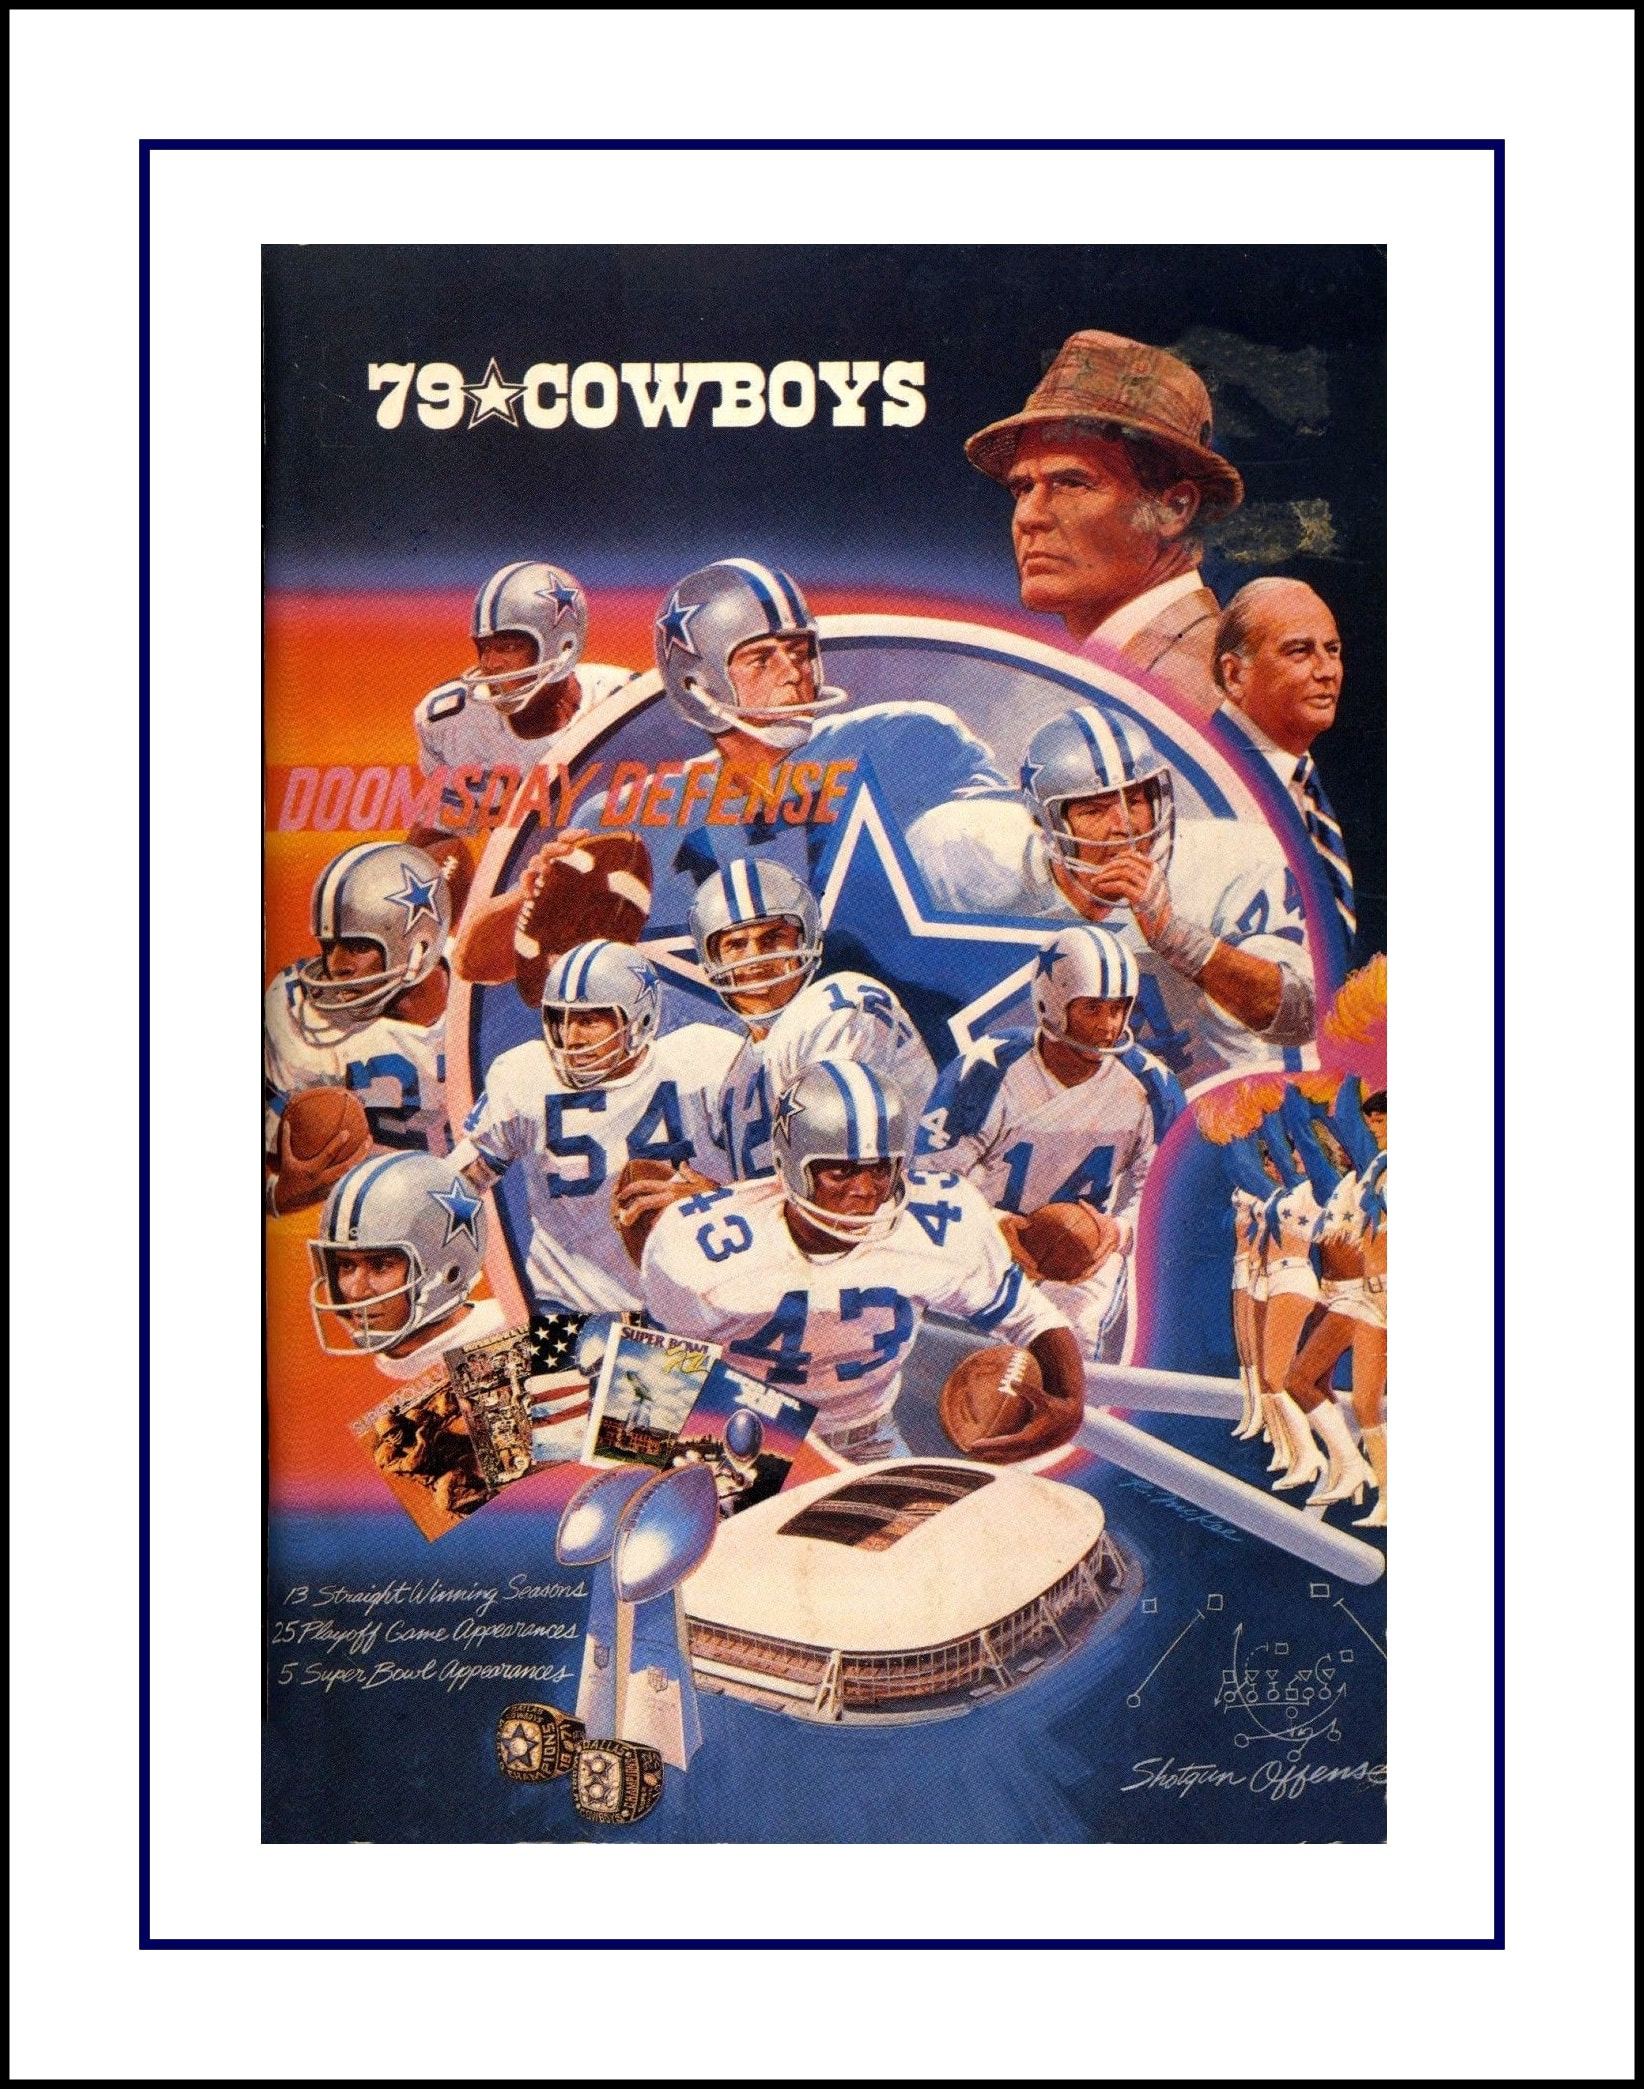 1968 USF&G Cowboy Joe Vintage Print Ad Dallas Cowboys 